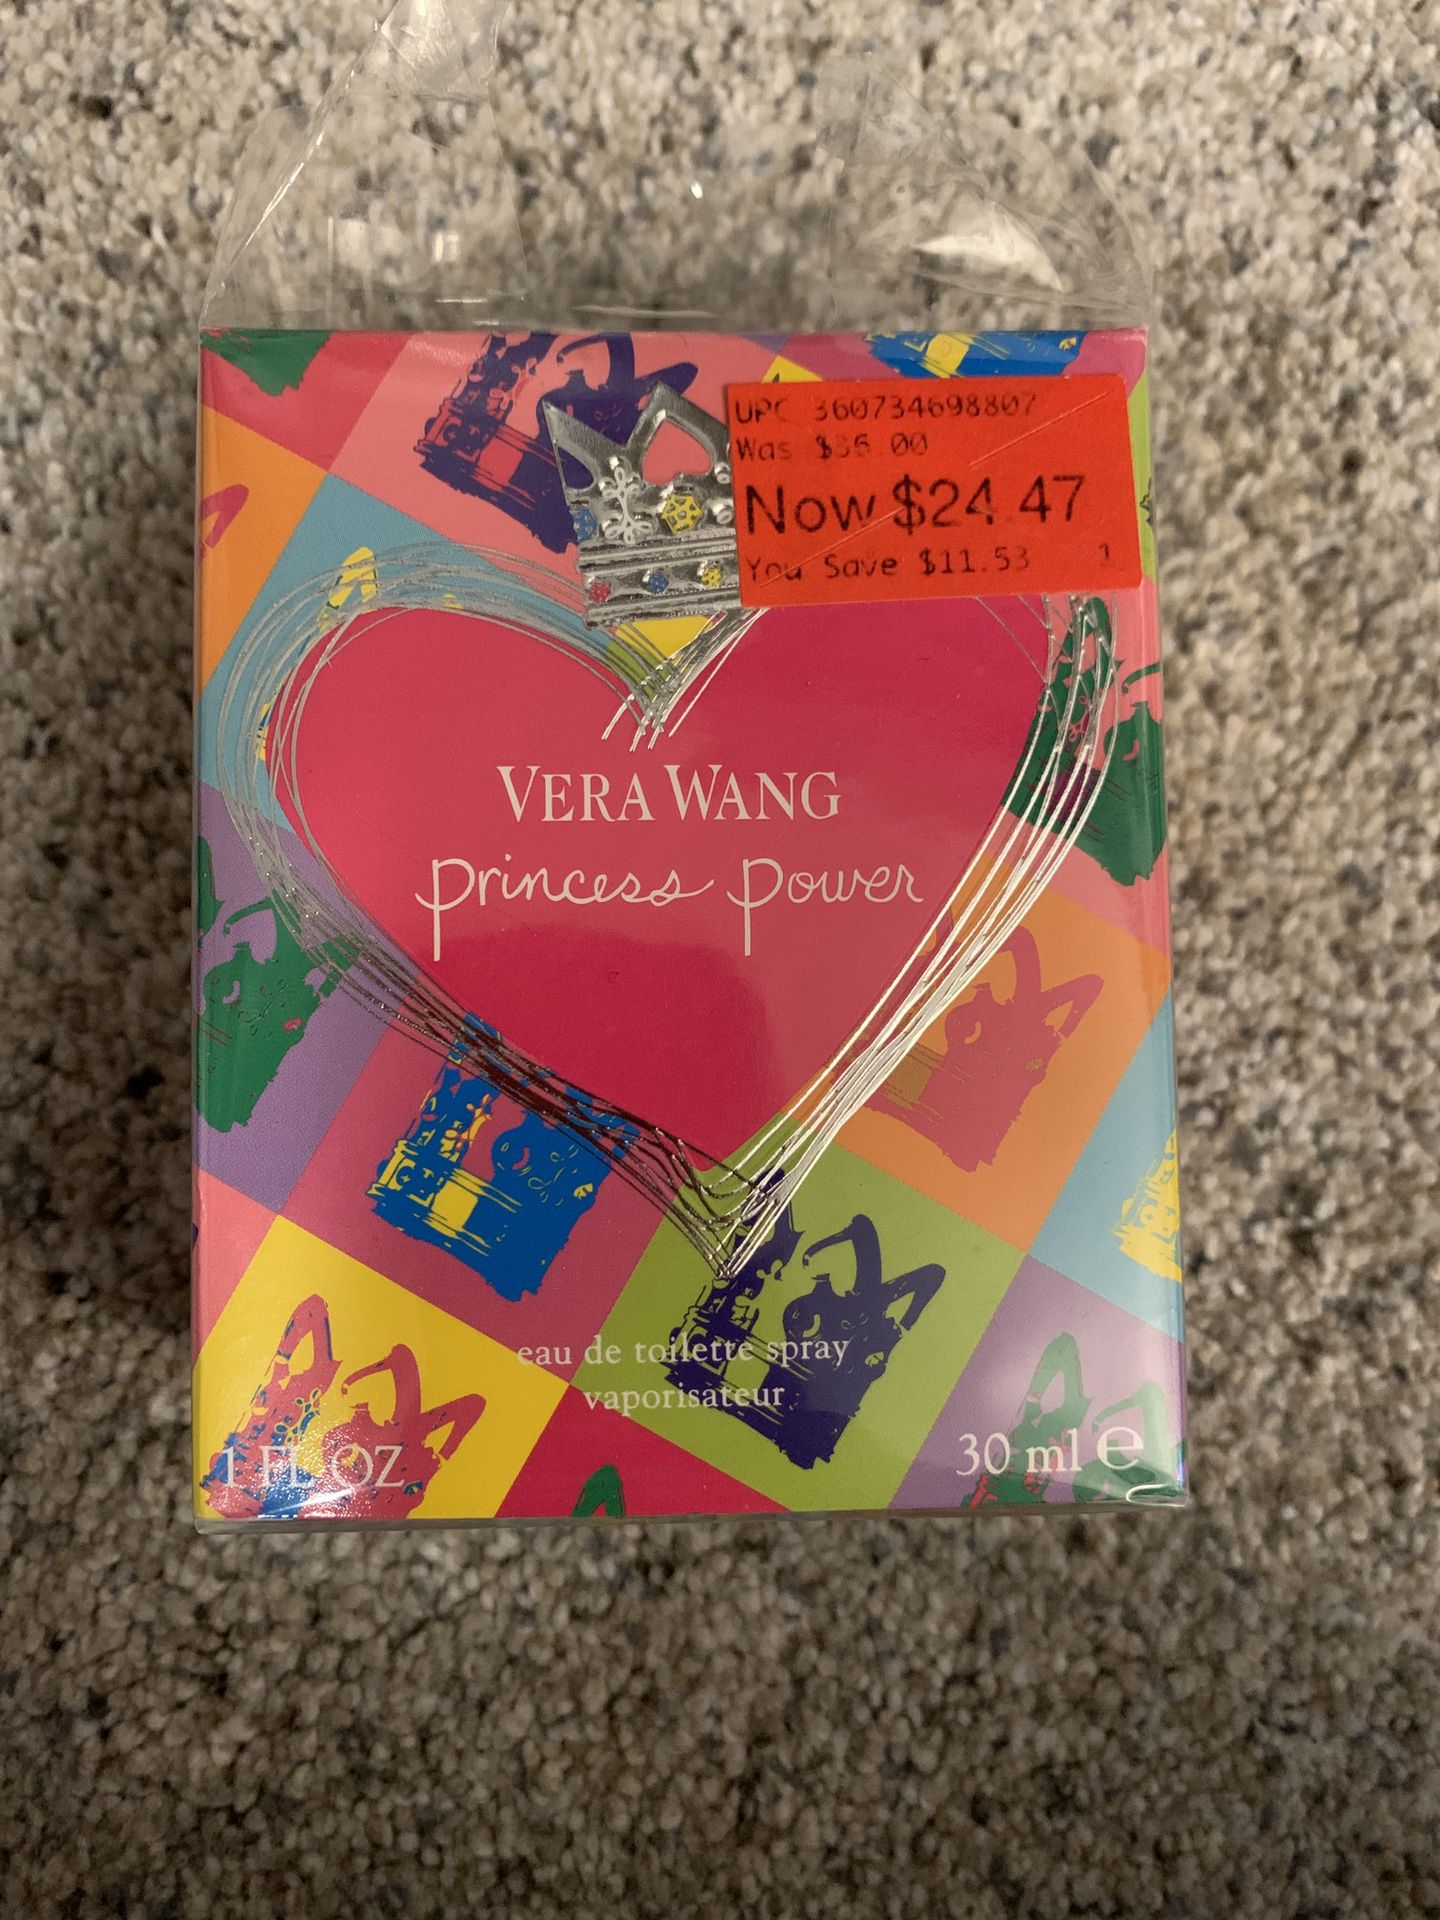 Vera Wang princess power perfume